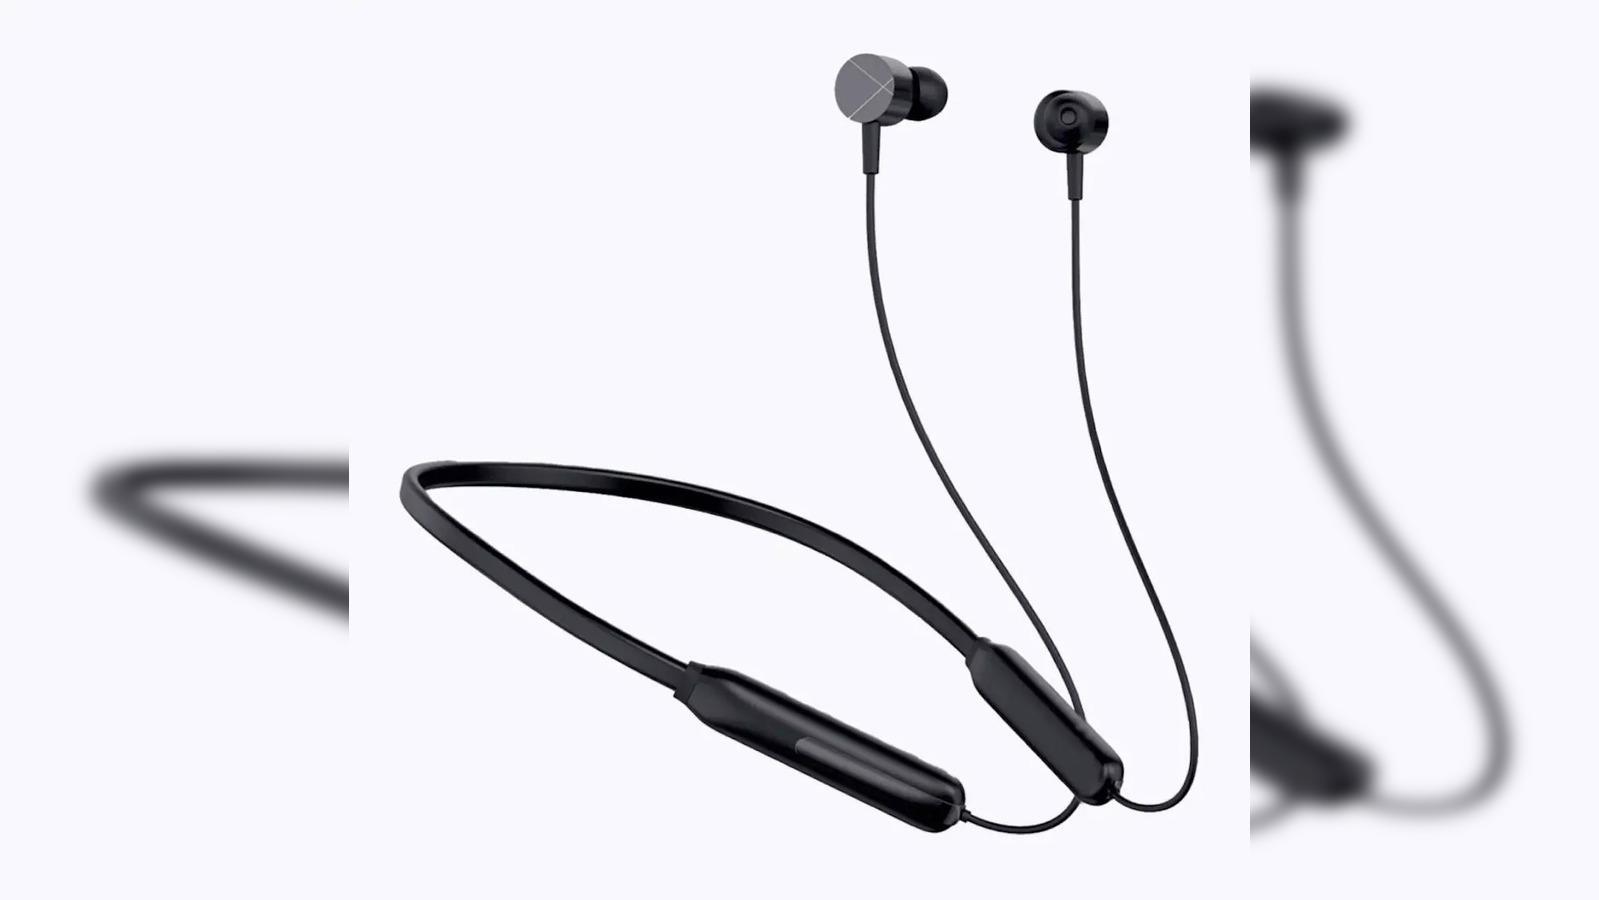 Neckband Bluetooth headphone- 5 Core